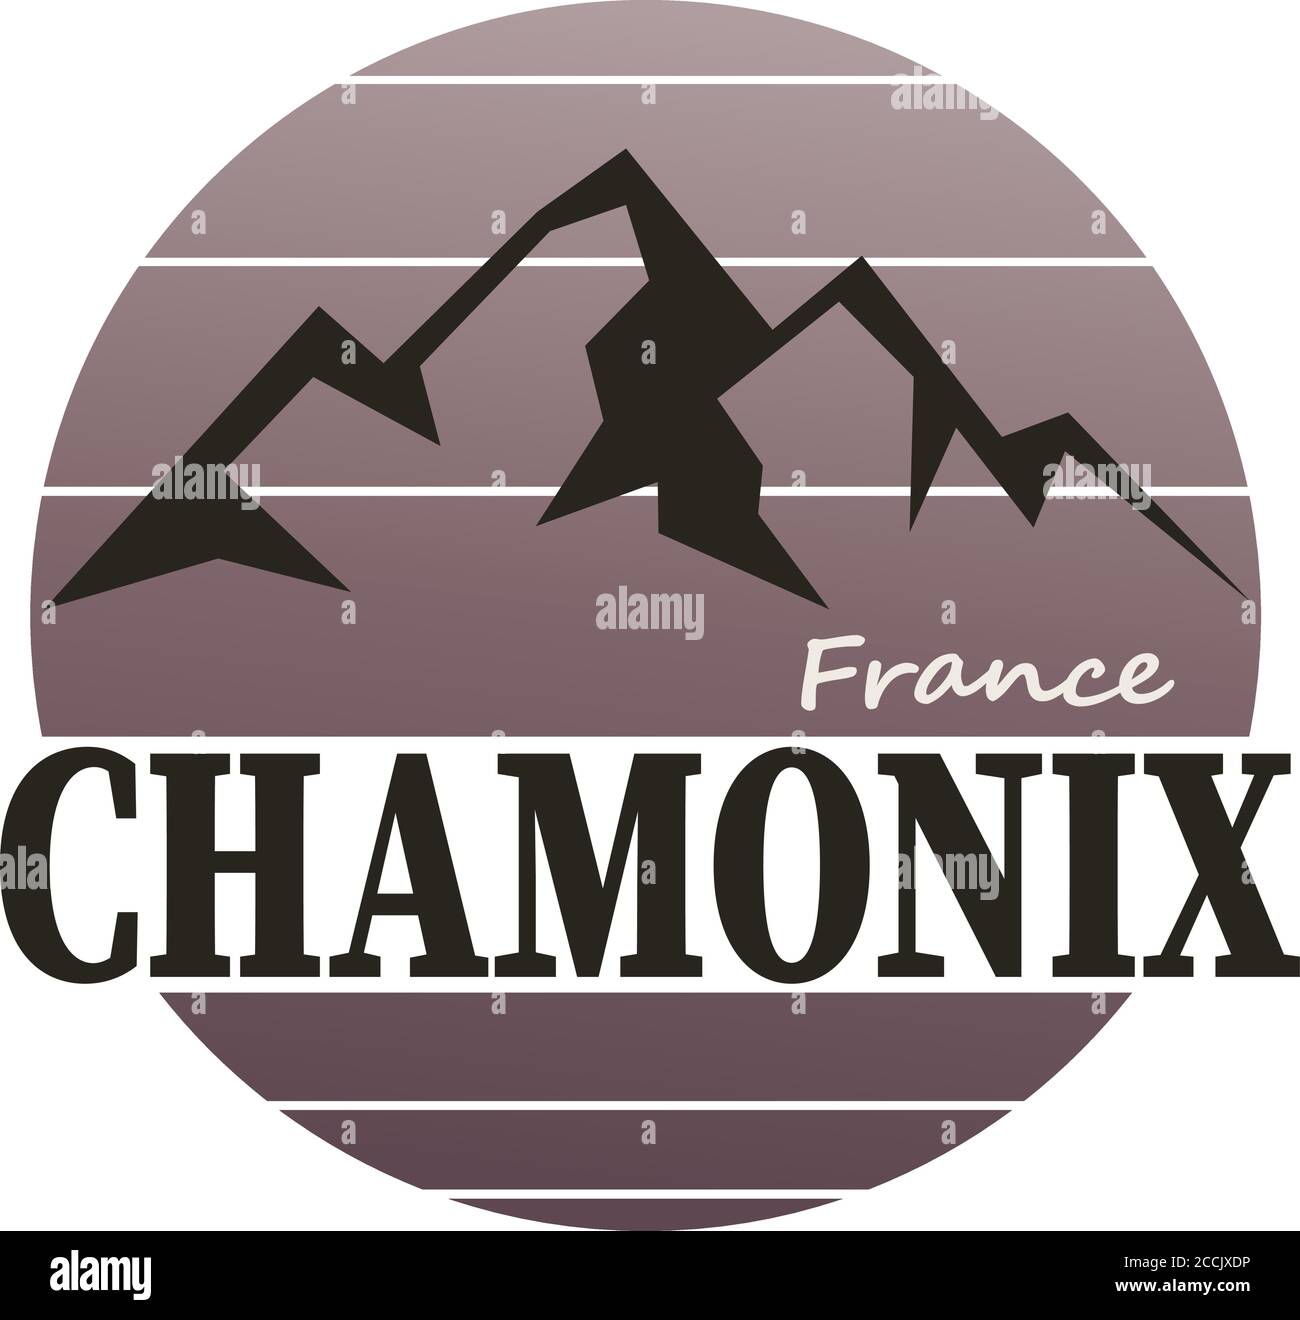 Abstrakter Stempel oder Emblem mit dem Namen der Stadt Chamonix in Frankreich, Vektorgrafik Stock Vektor